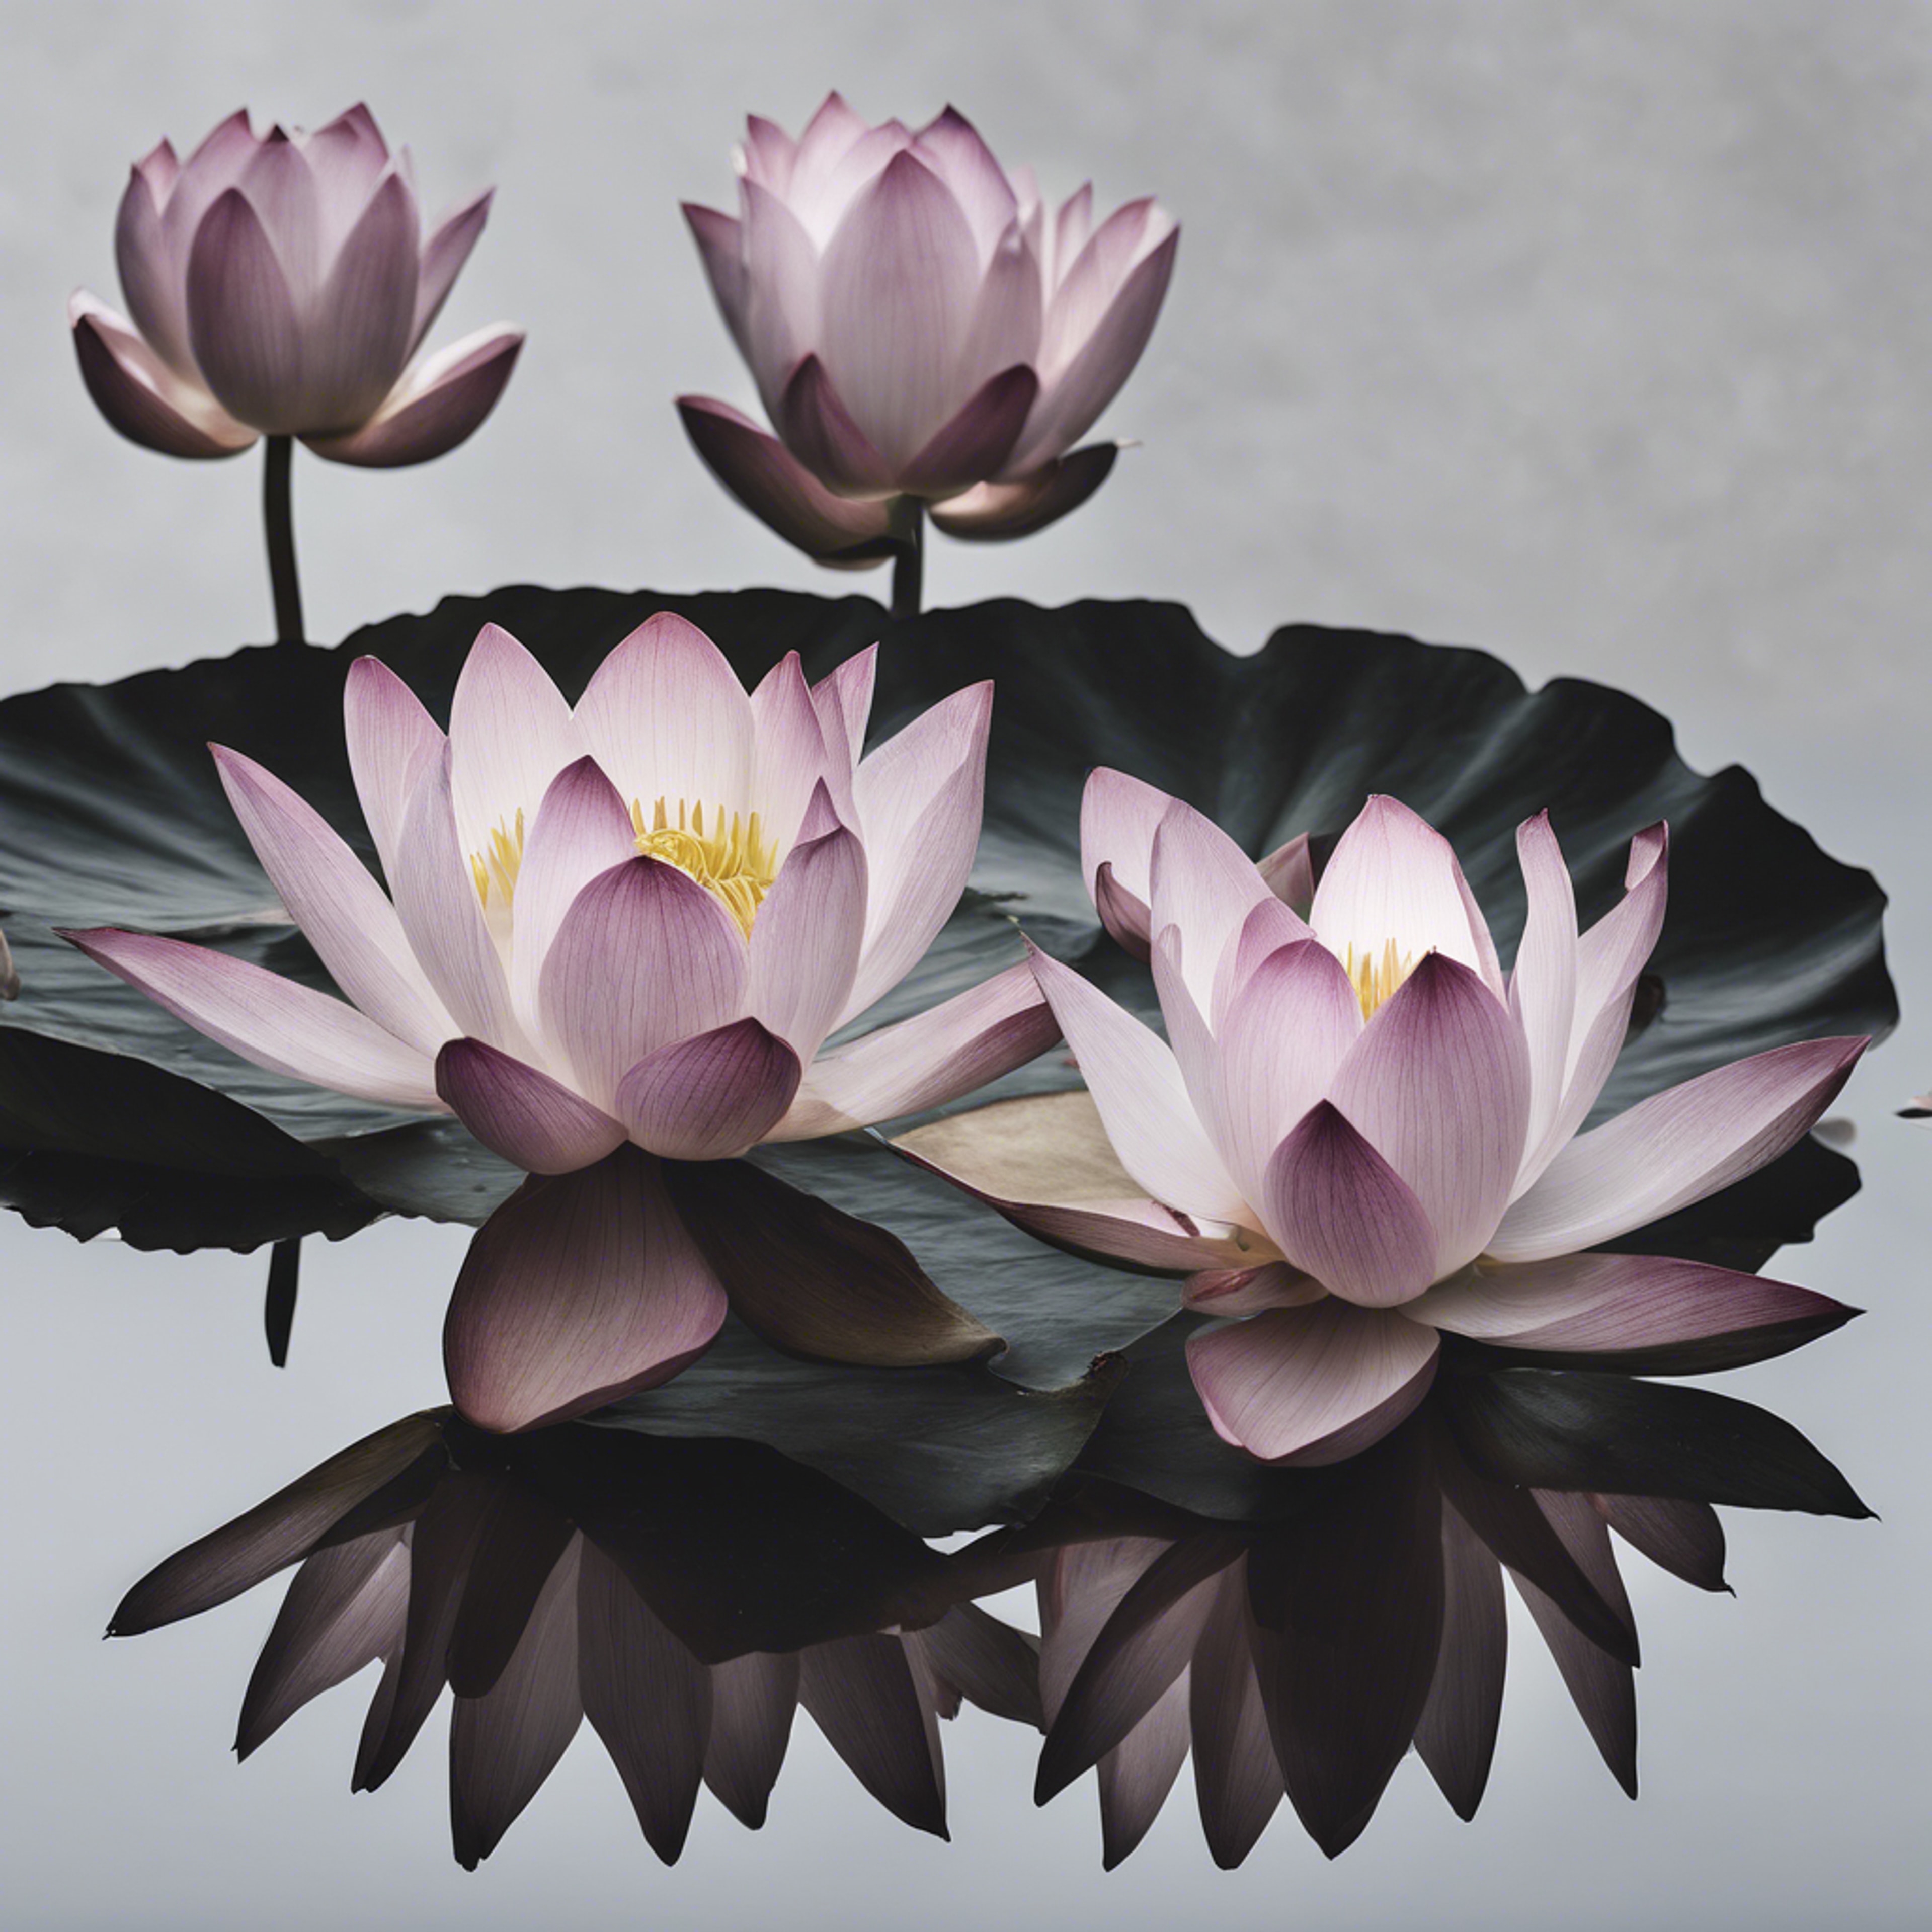 Dark lotuses floating elegantly on a textured white canvas. Hintergrund[326d2c6a66b946e99dbc]